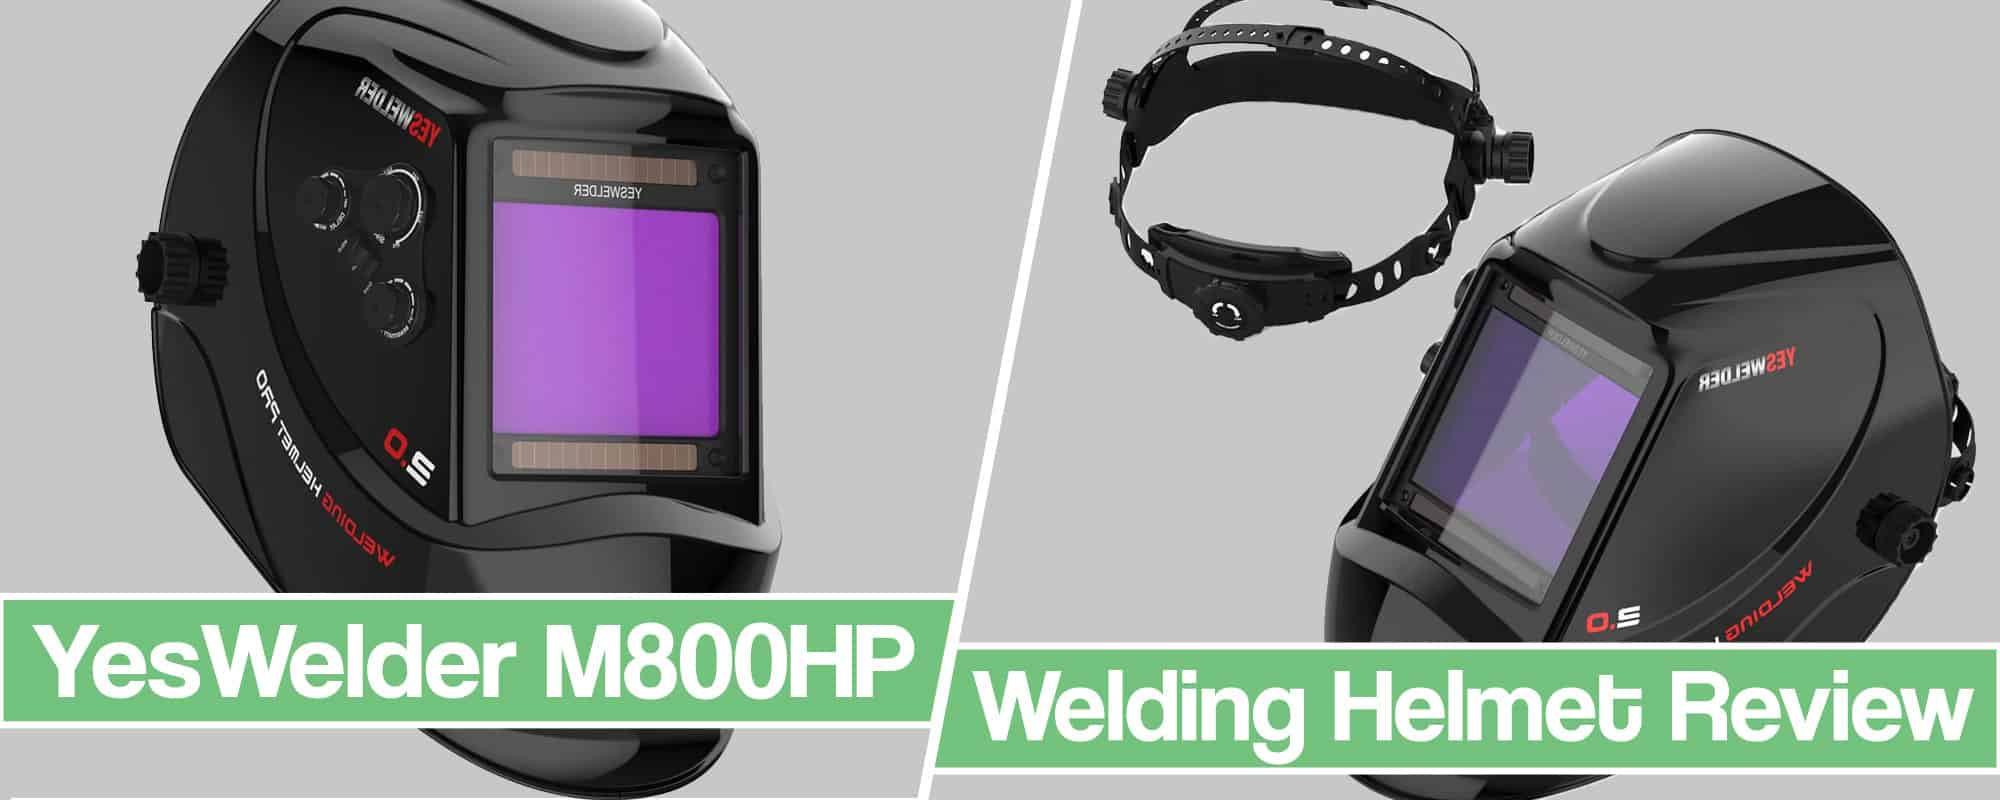 YesWelder M800HP Welding Helmet Review – Price/Quality Ratio [2021]